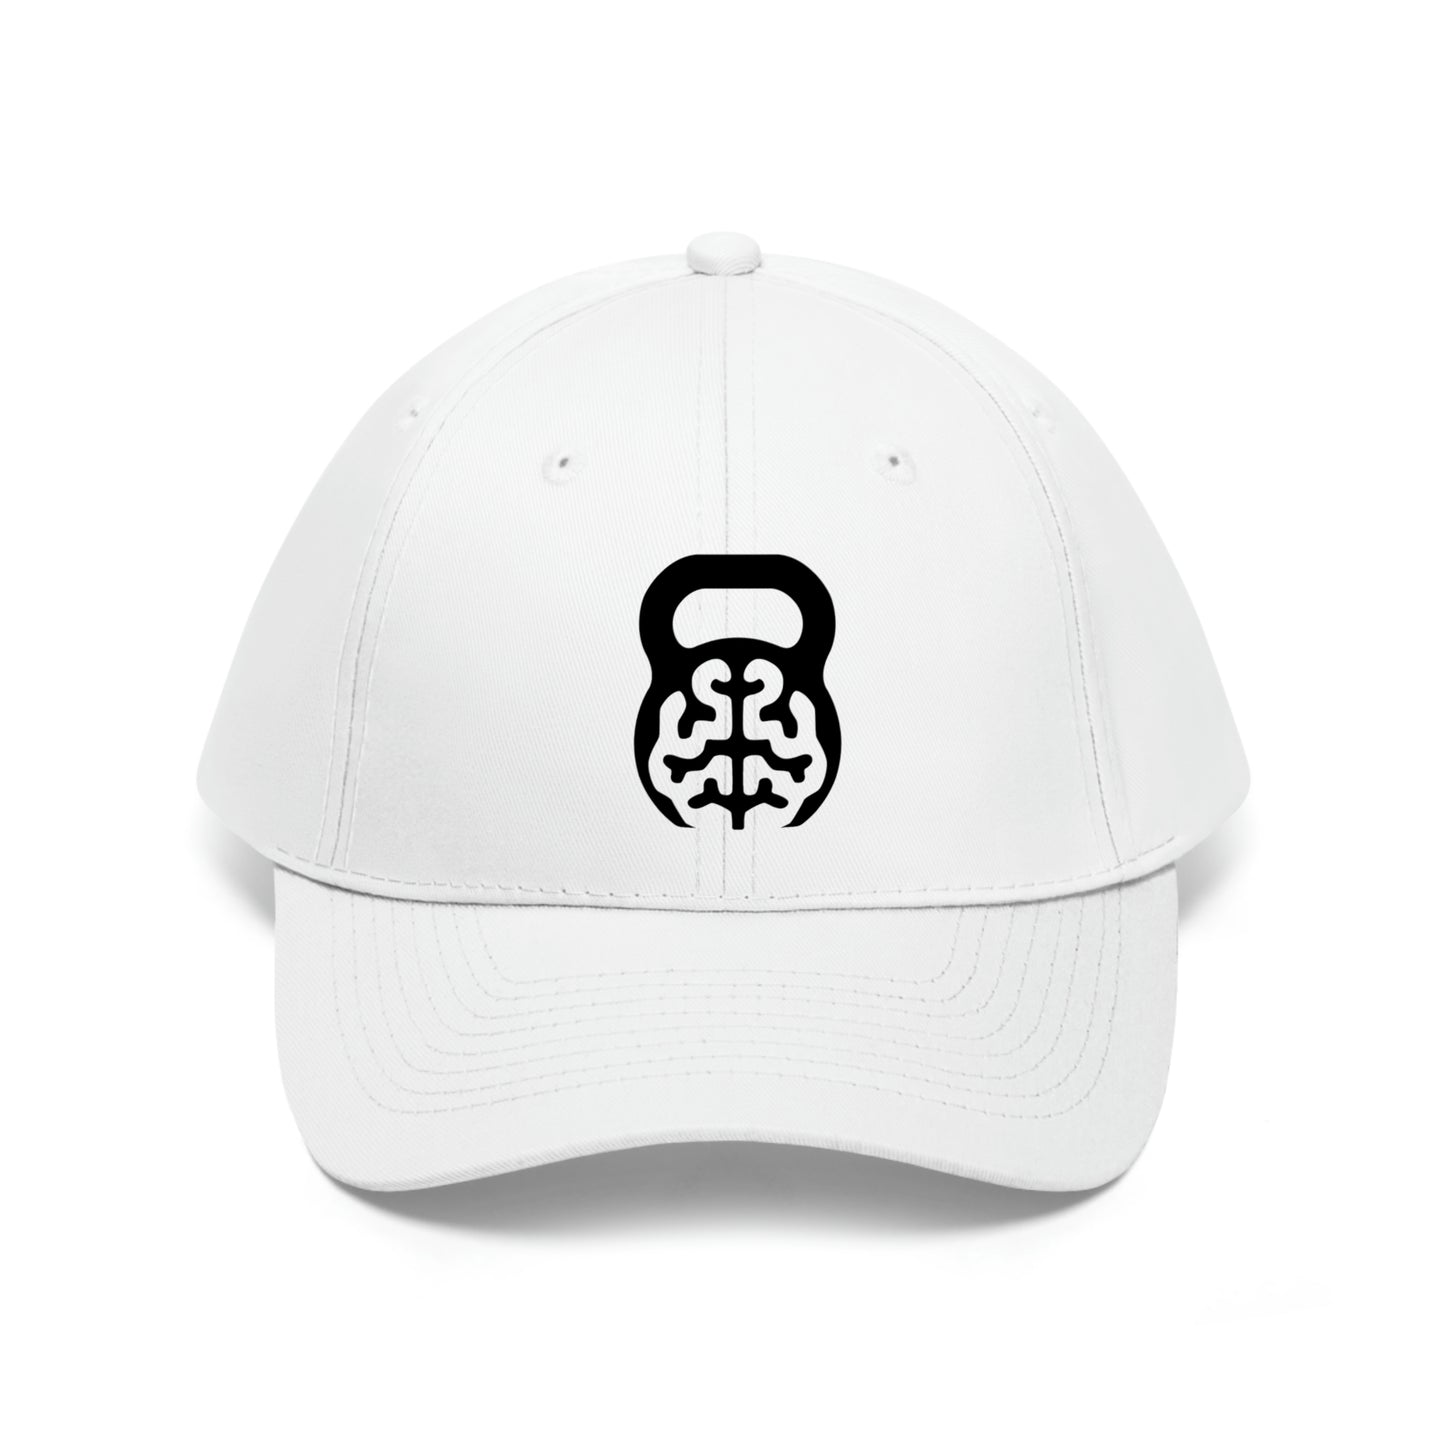 IDology Embroidered Unisex Twill Hat